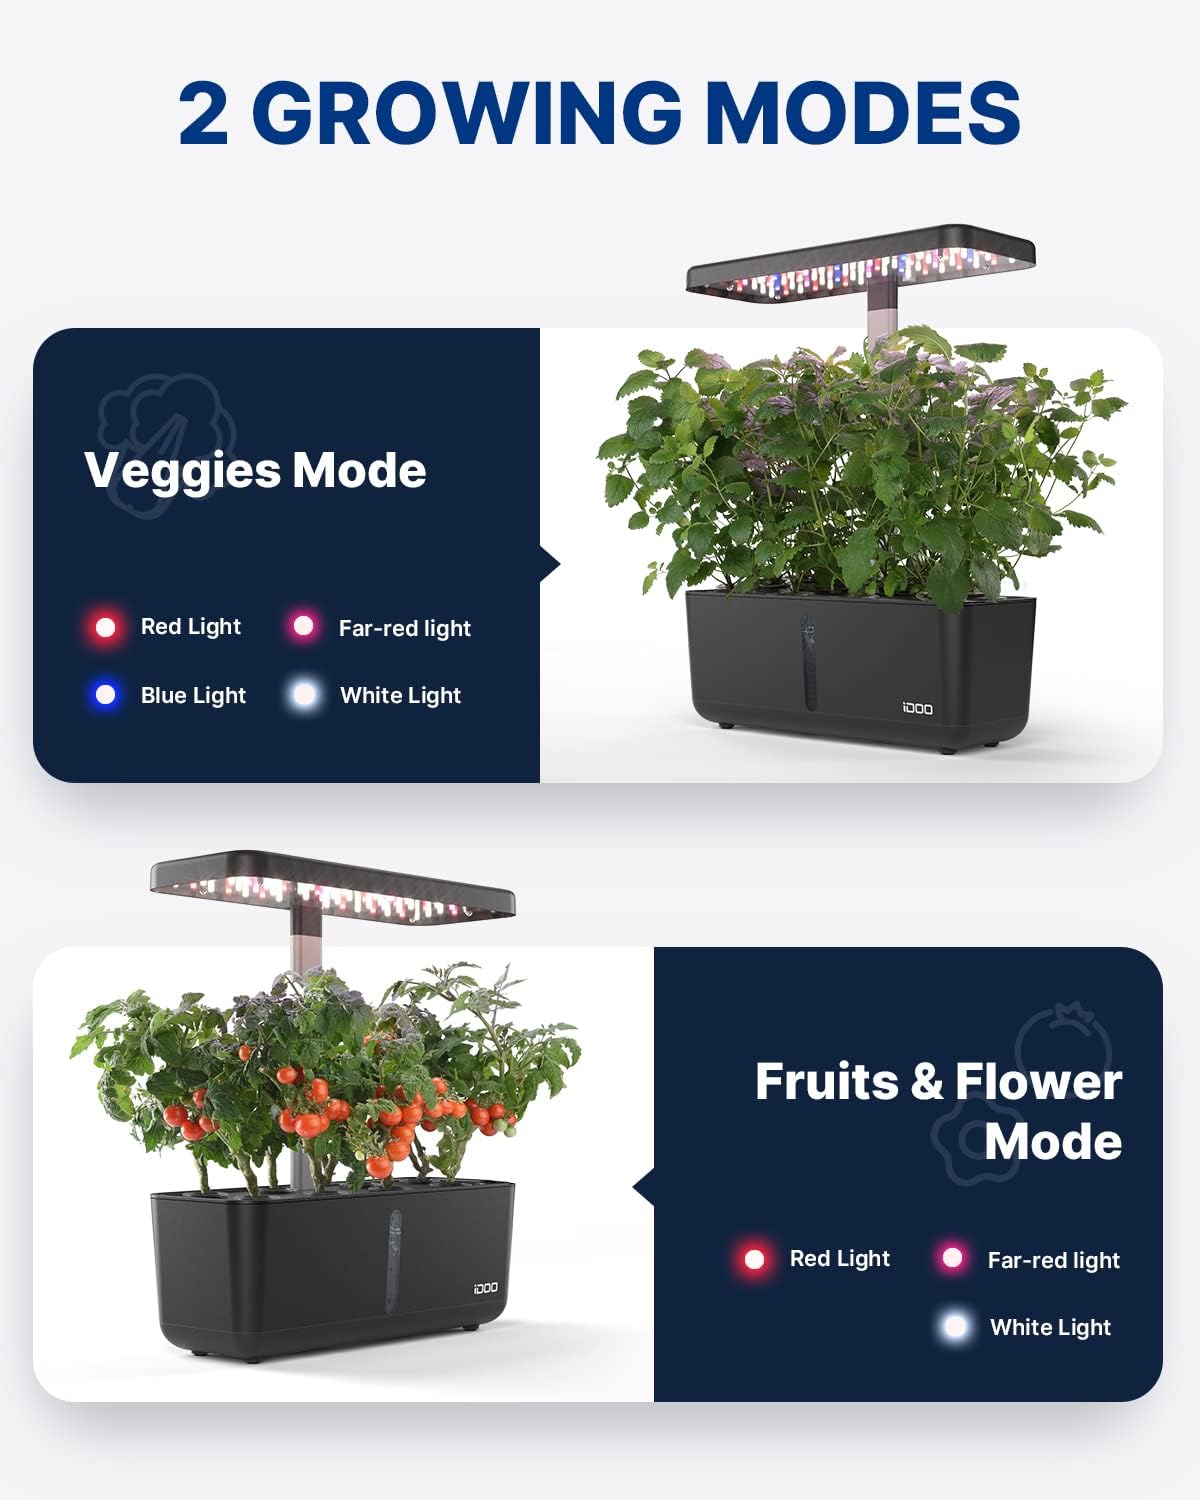 iDOO GrowSmart with seed bundle - 8 Pods BFDpick bundle Hydroponic Growing System Hydroponic Growing Systems Wifi by idoo